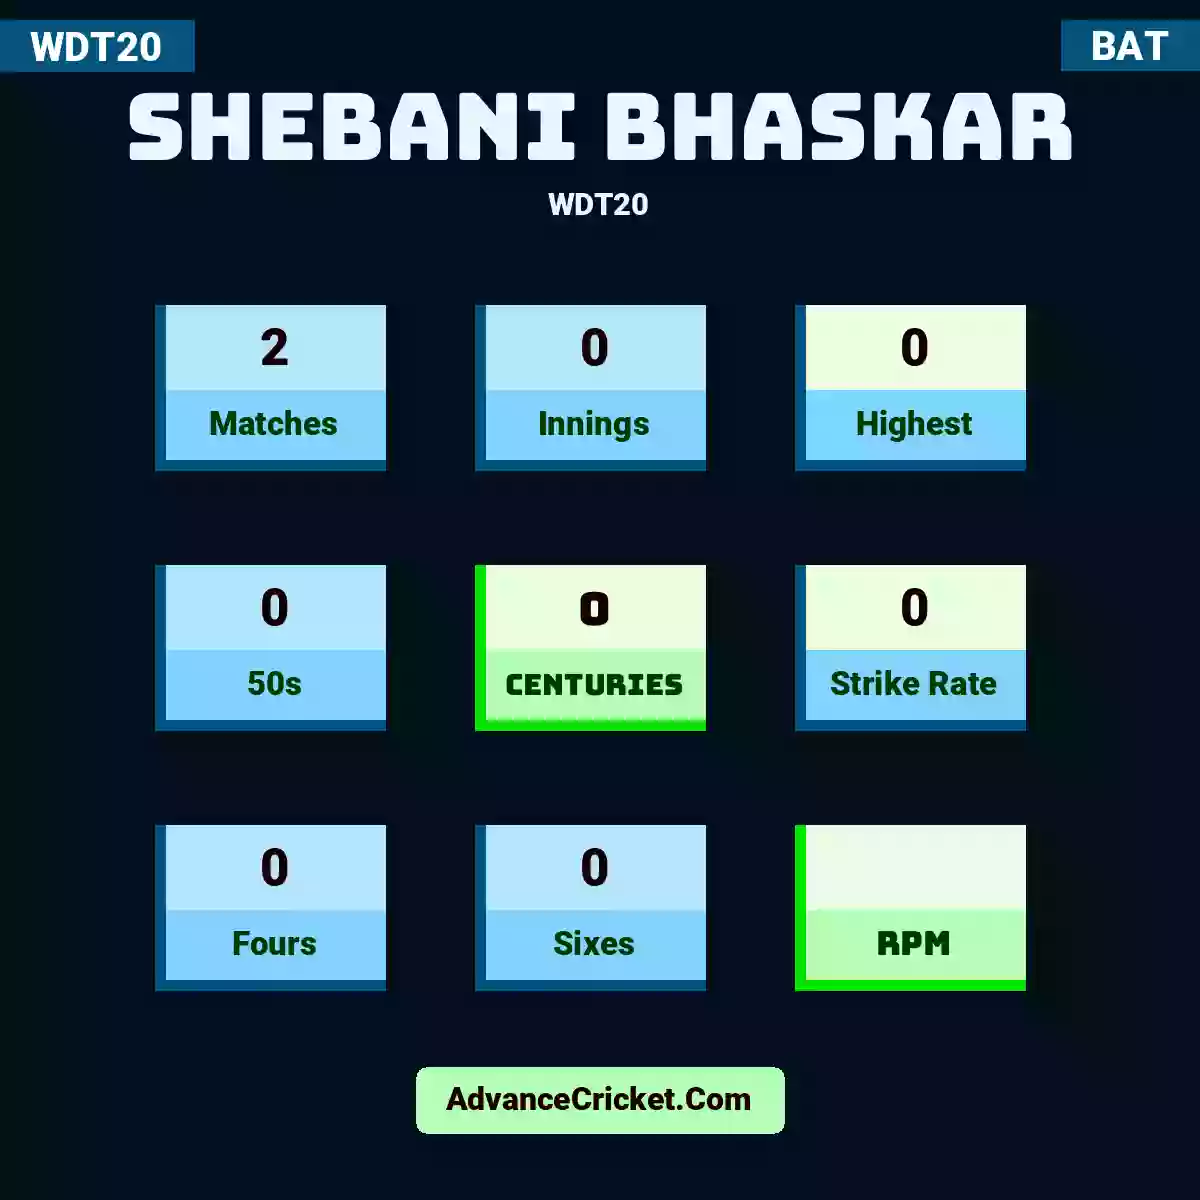 Shebani Bhaskar WDT20 , Shebani Bhaskar played 2 matches, scored 0 runs as highest, 0 half-centuries, and 0 centuries, with a strike rate of 0. S.Bhaskar hit 0 fours and 0 sixes.